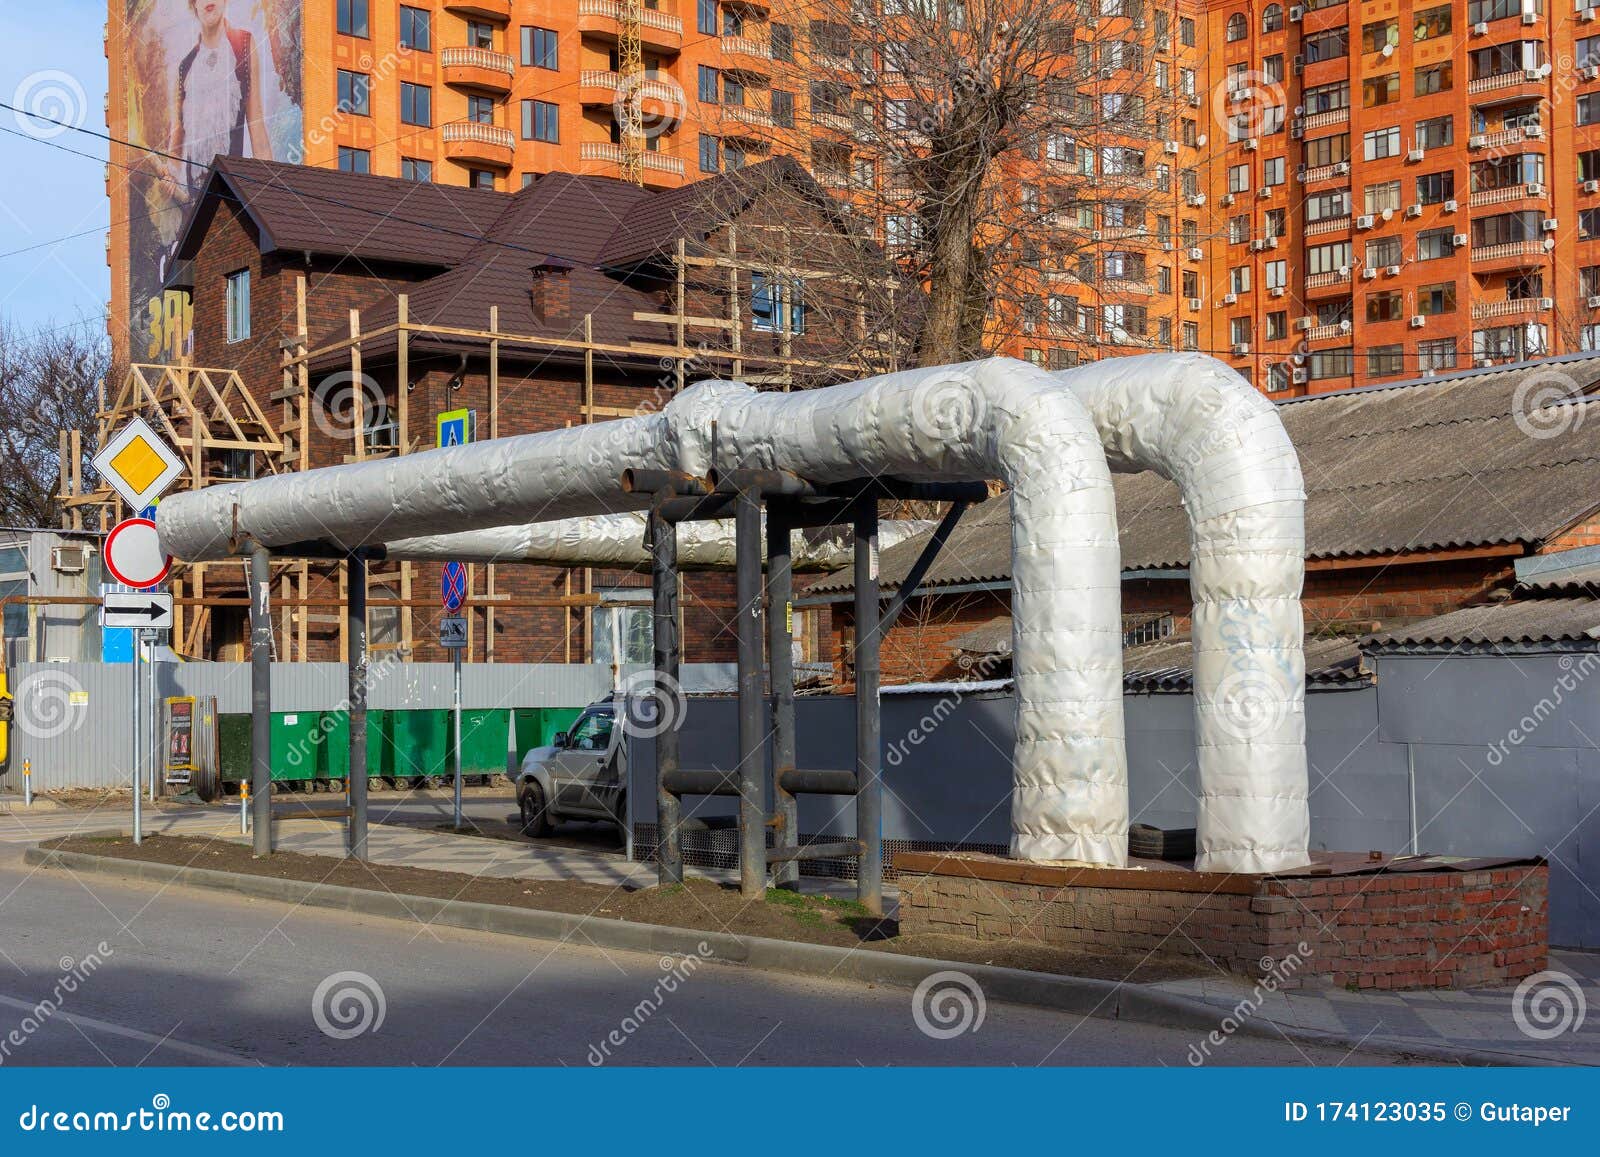 overhead-heat-pipes-pipeline-above-ground-conducts-heat-heating-urban-homes-krasnodar-russia-february-overhead-heat-174123035.jpg